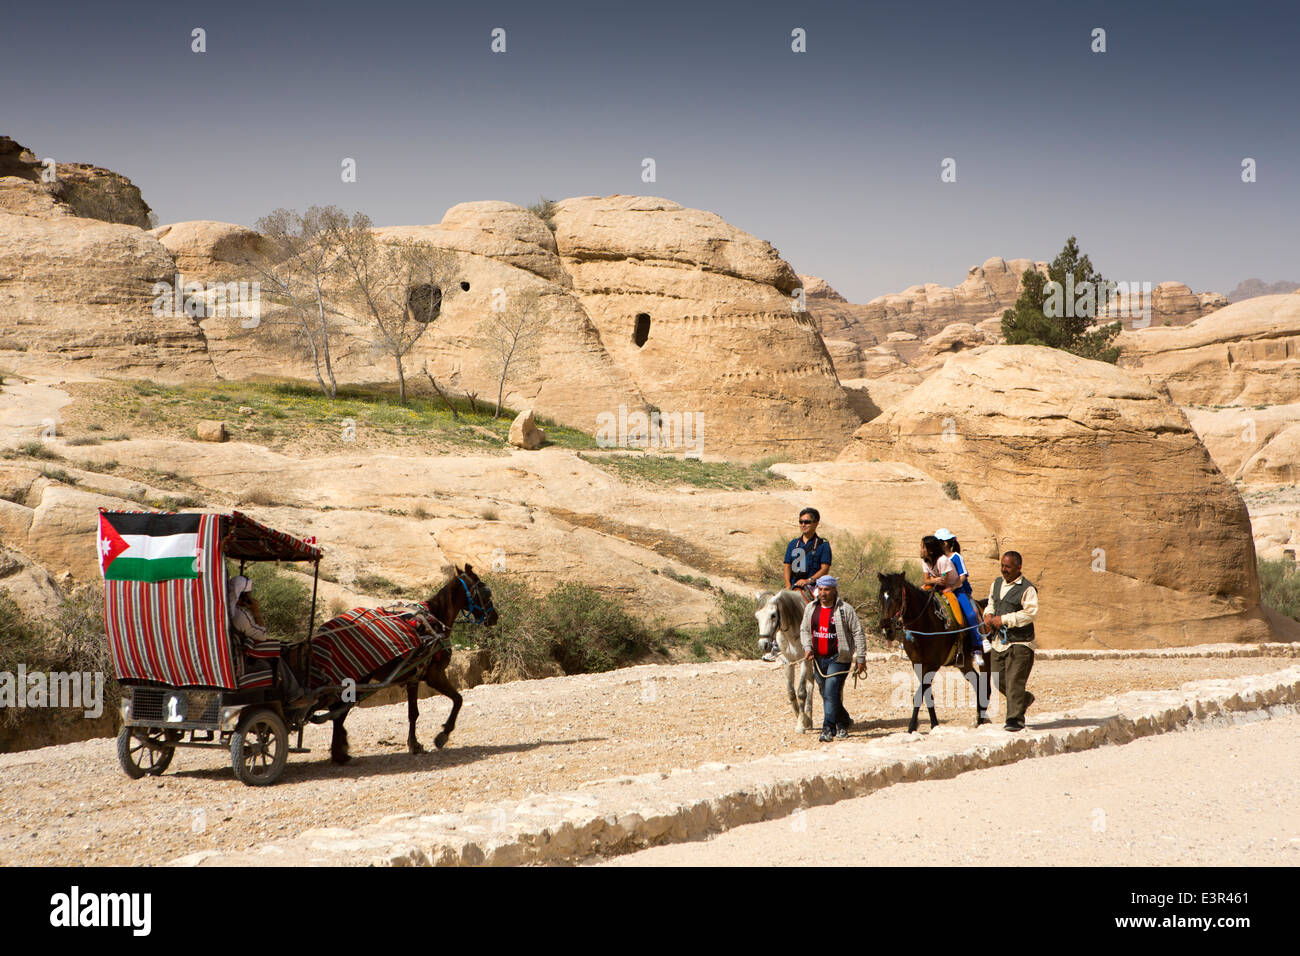 Jordan, Arabah, Petra, carriage and horses giving tourists ride to Al-Siq entrance Stock Photo